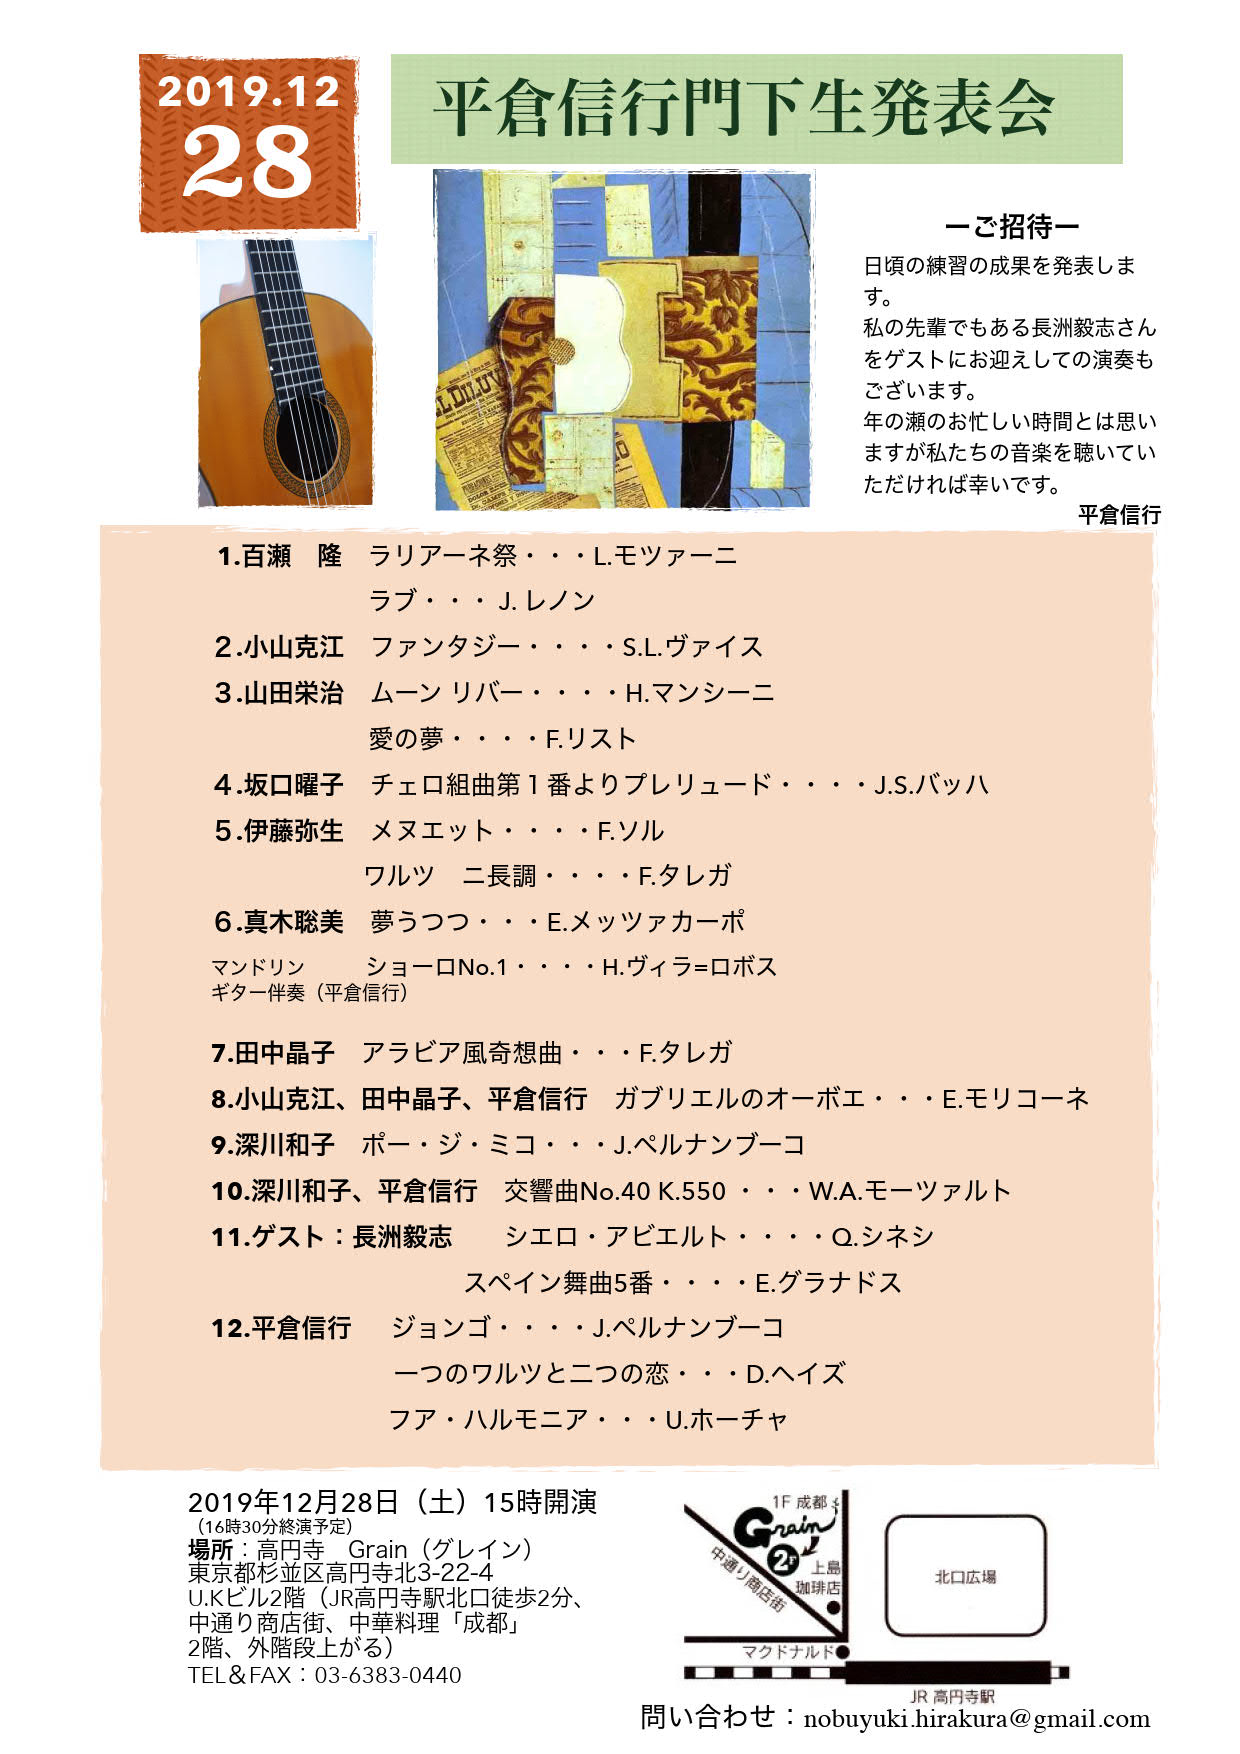 Takeshi Nagasu S Concert Log